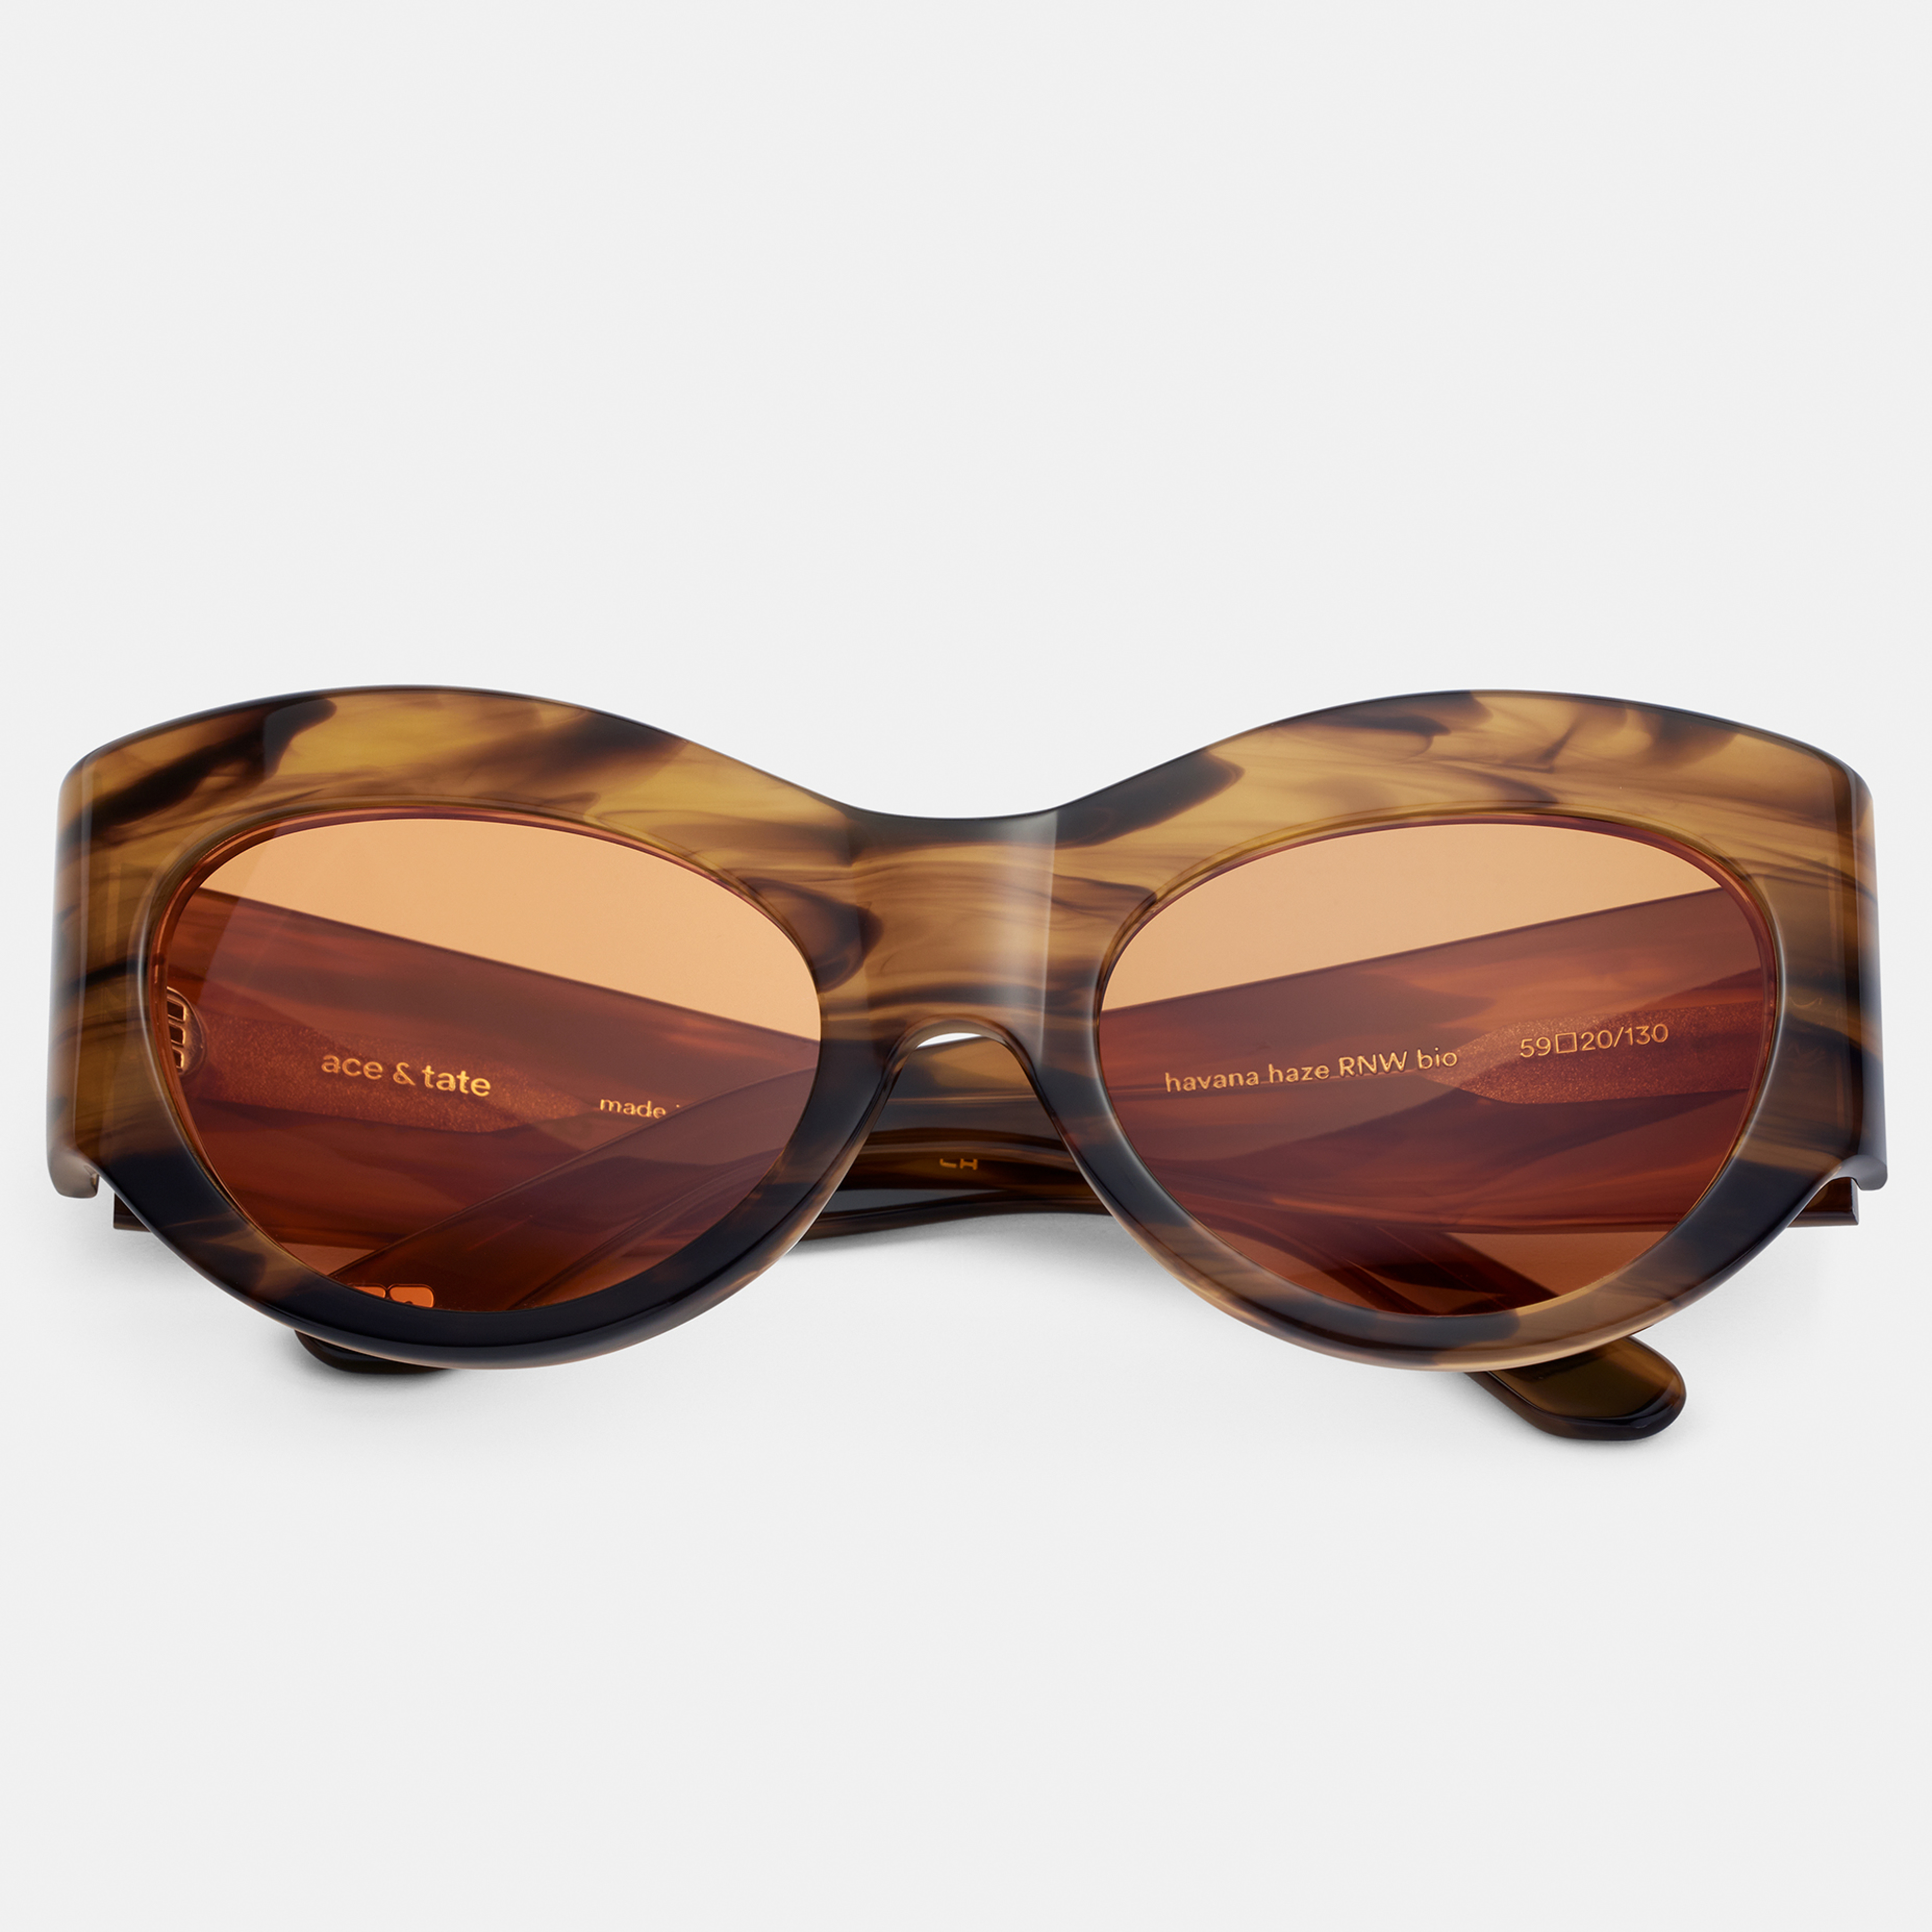 Ace & Tate Sunglasses | oval Renew bio acetate in Brown, tortoise